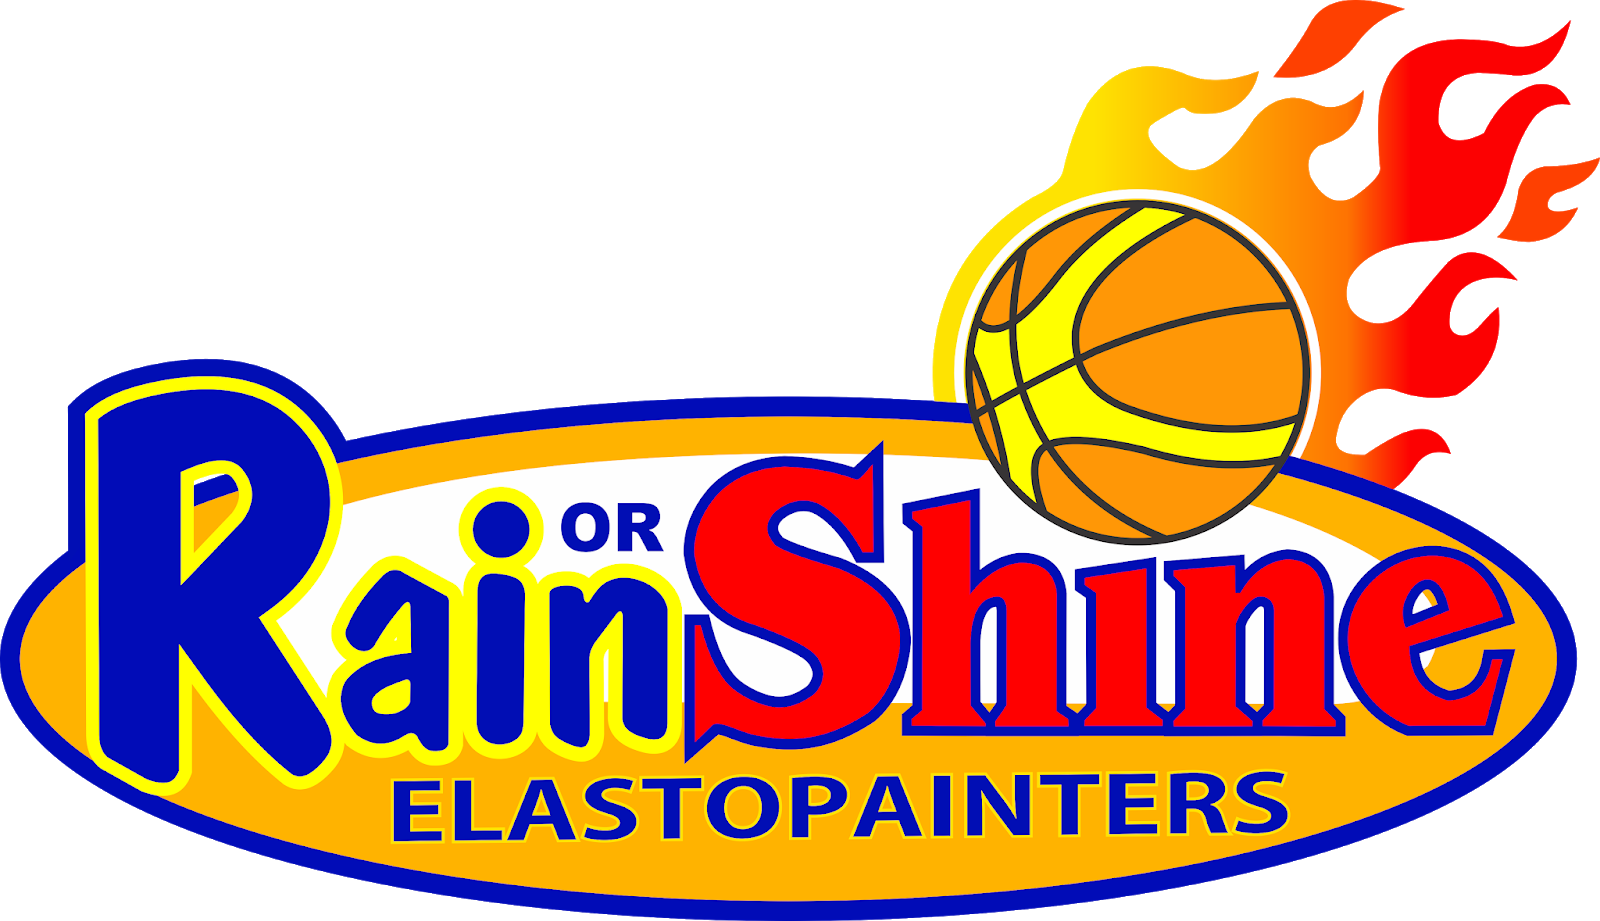 Shine лого. Rain logo. Ln-raining logo. Rain or shine